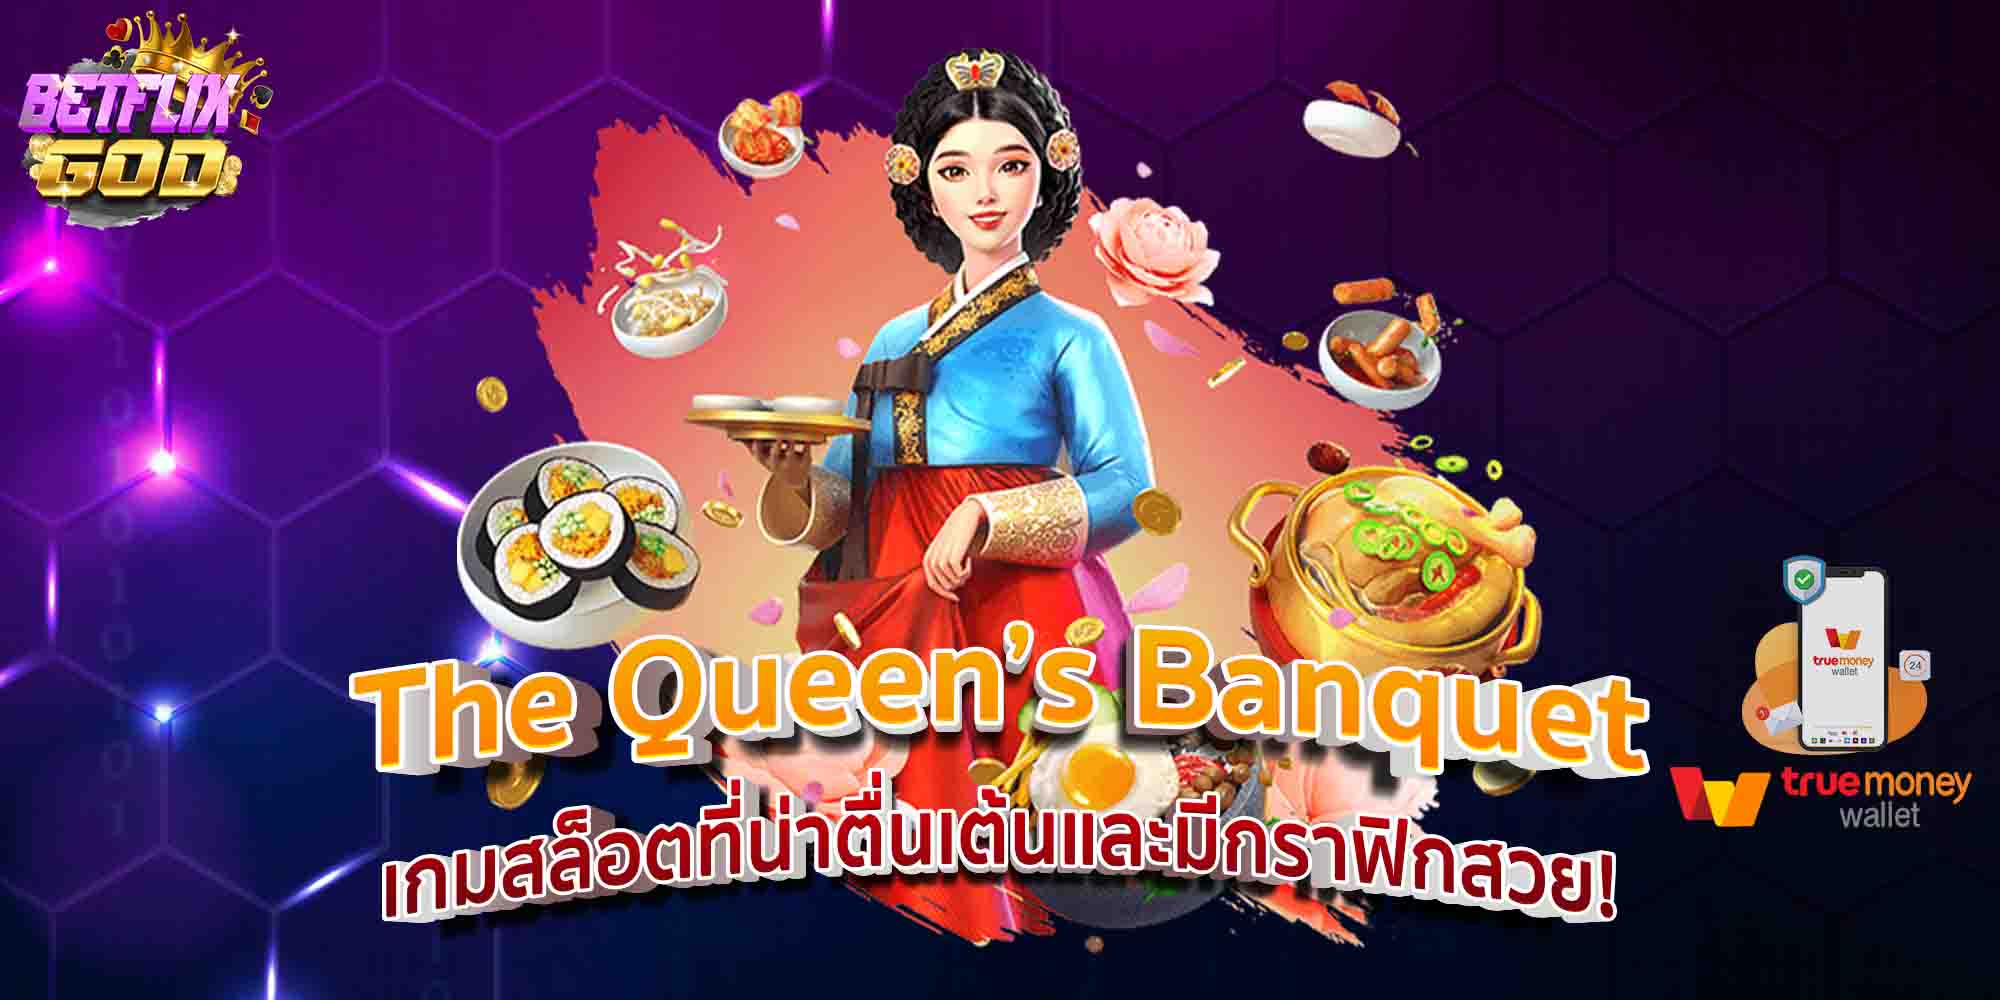 The Queen’s Banquet เกมสล็อตที่น่าตื่นเต้นและมีกราฟิกสวย!